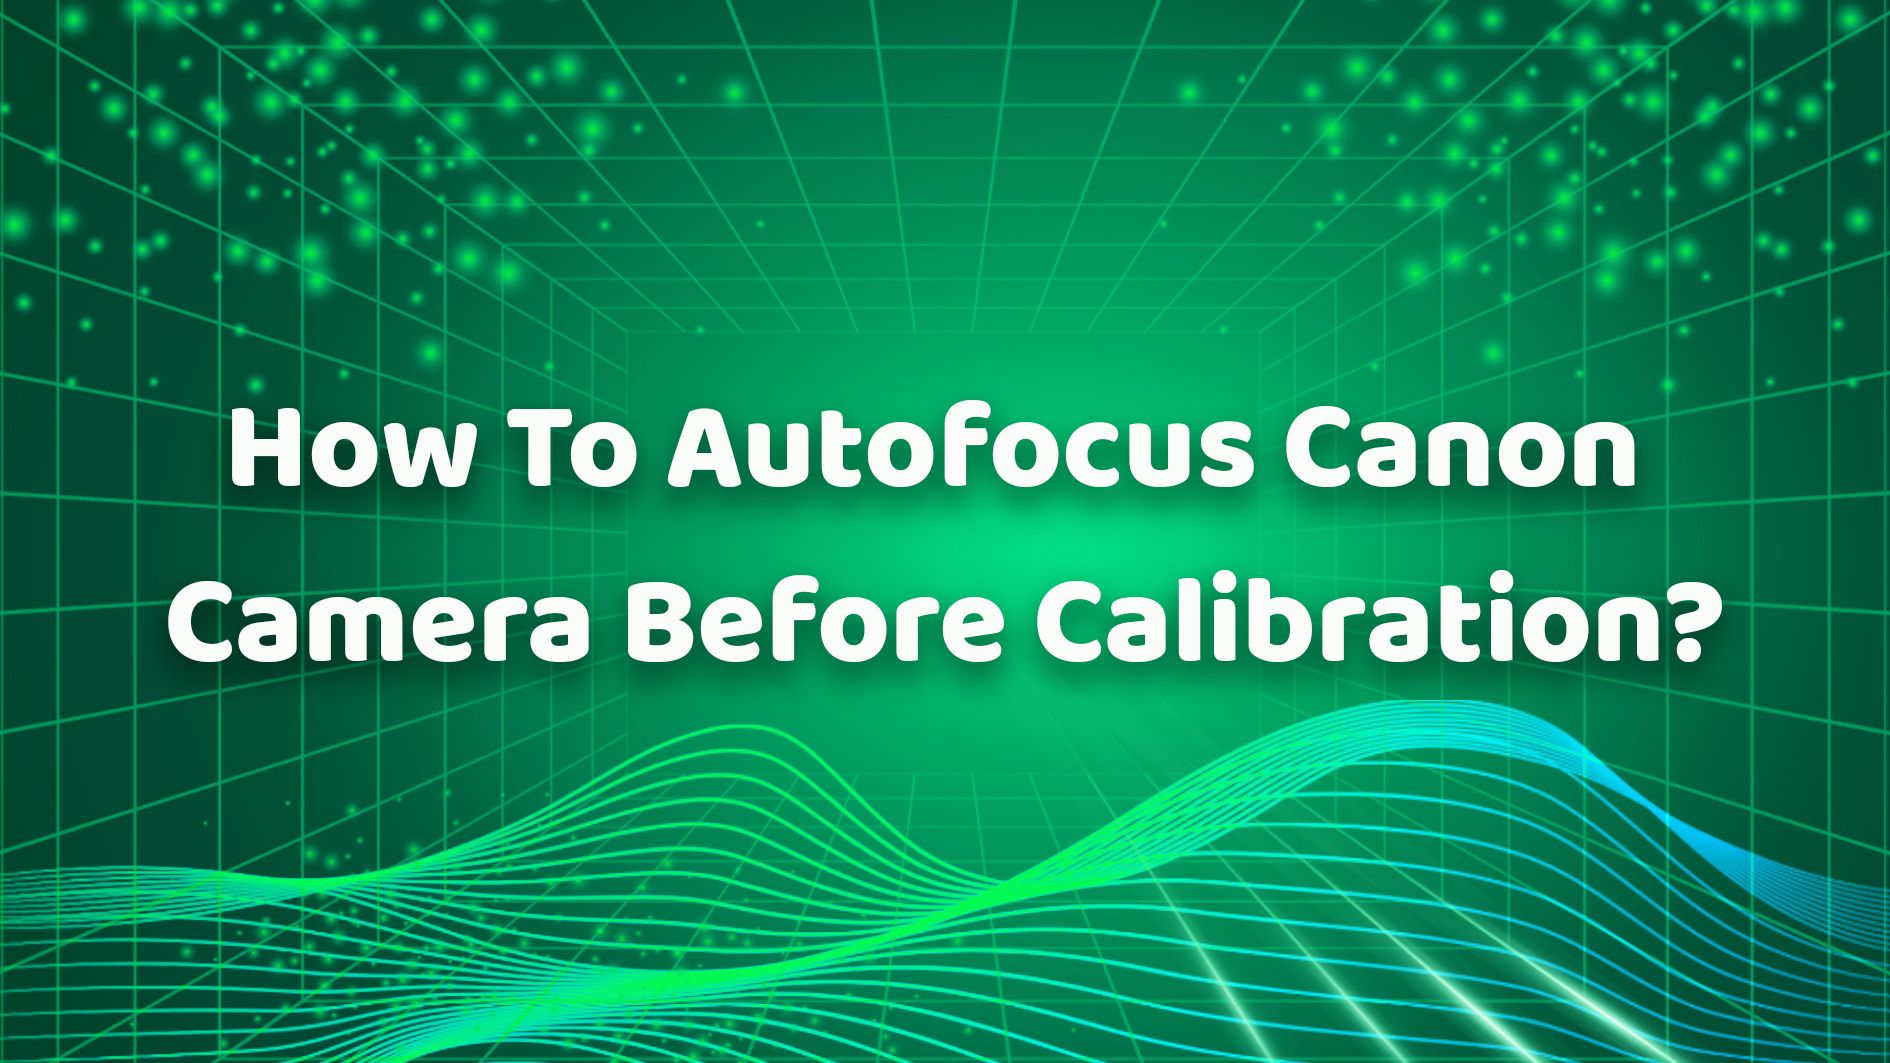 How to Autofocus Canon Camera Before Calibration